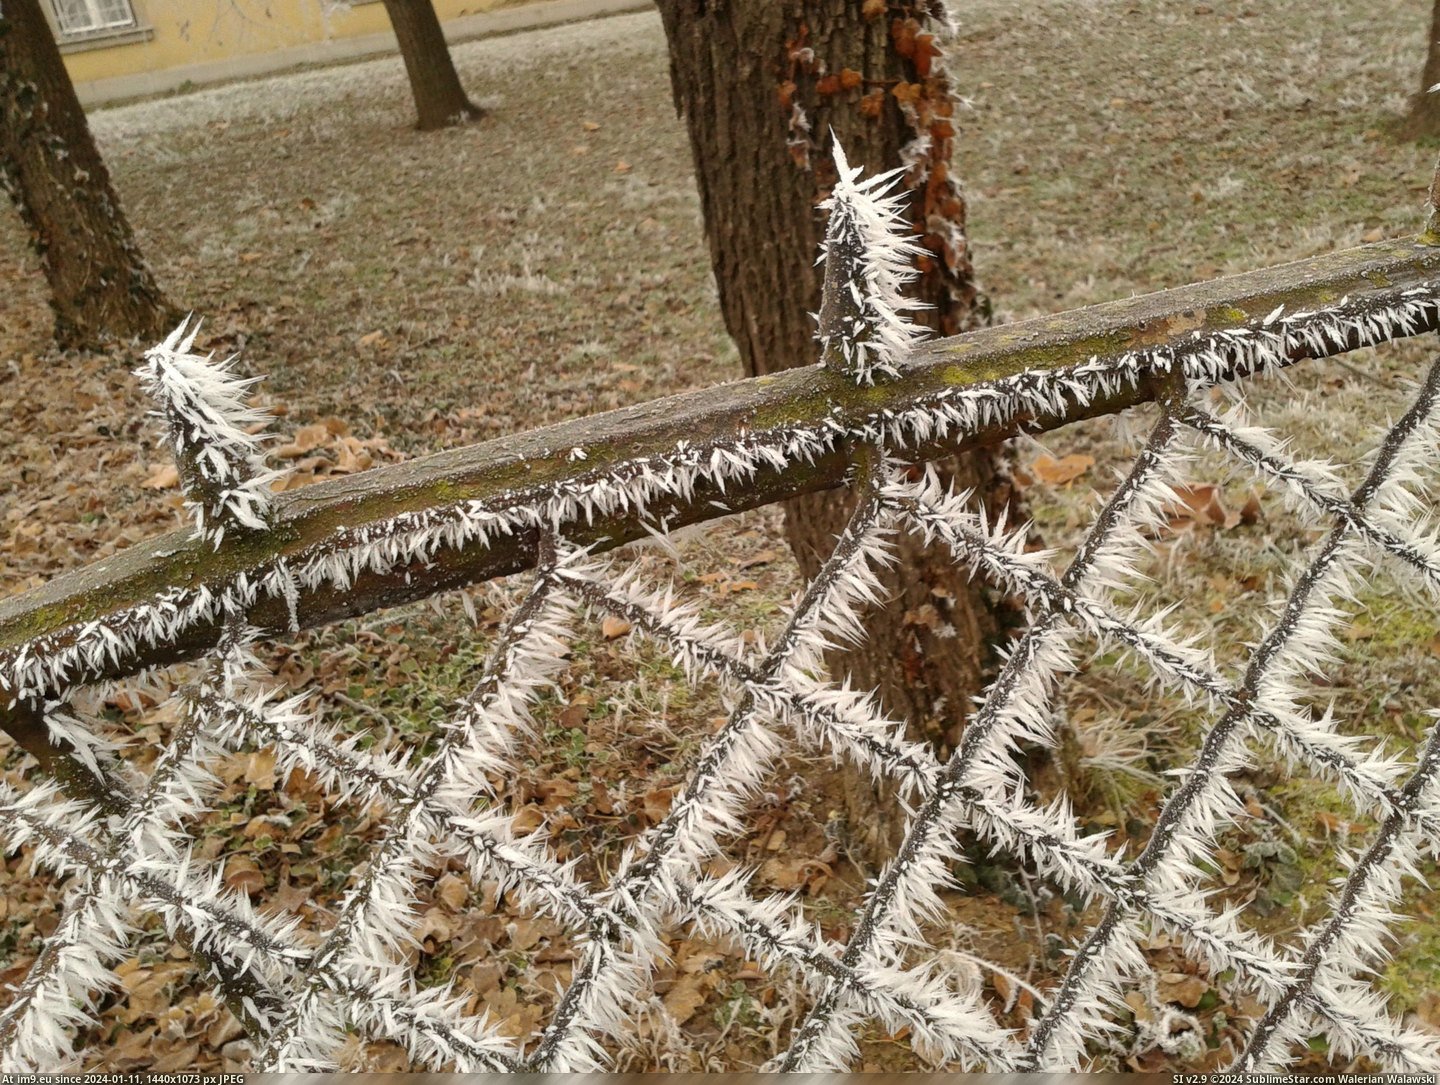 [Mildlyinteresting] The morning frost created spikes on the fence (in My r/MILDLYINTERESTING favs)